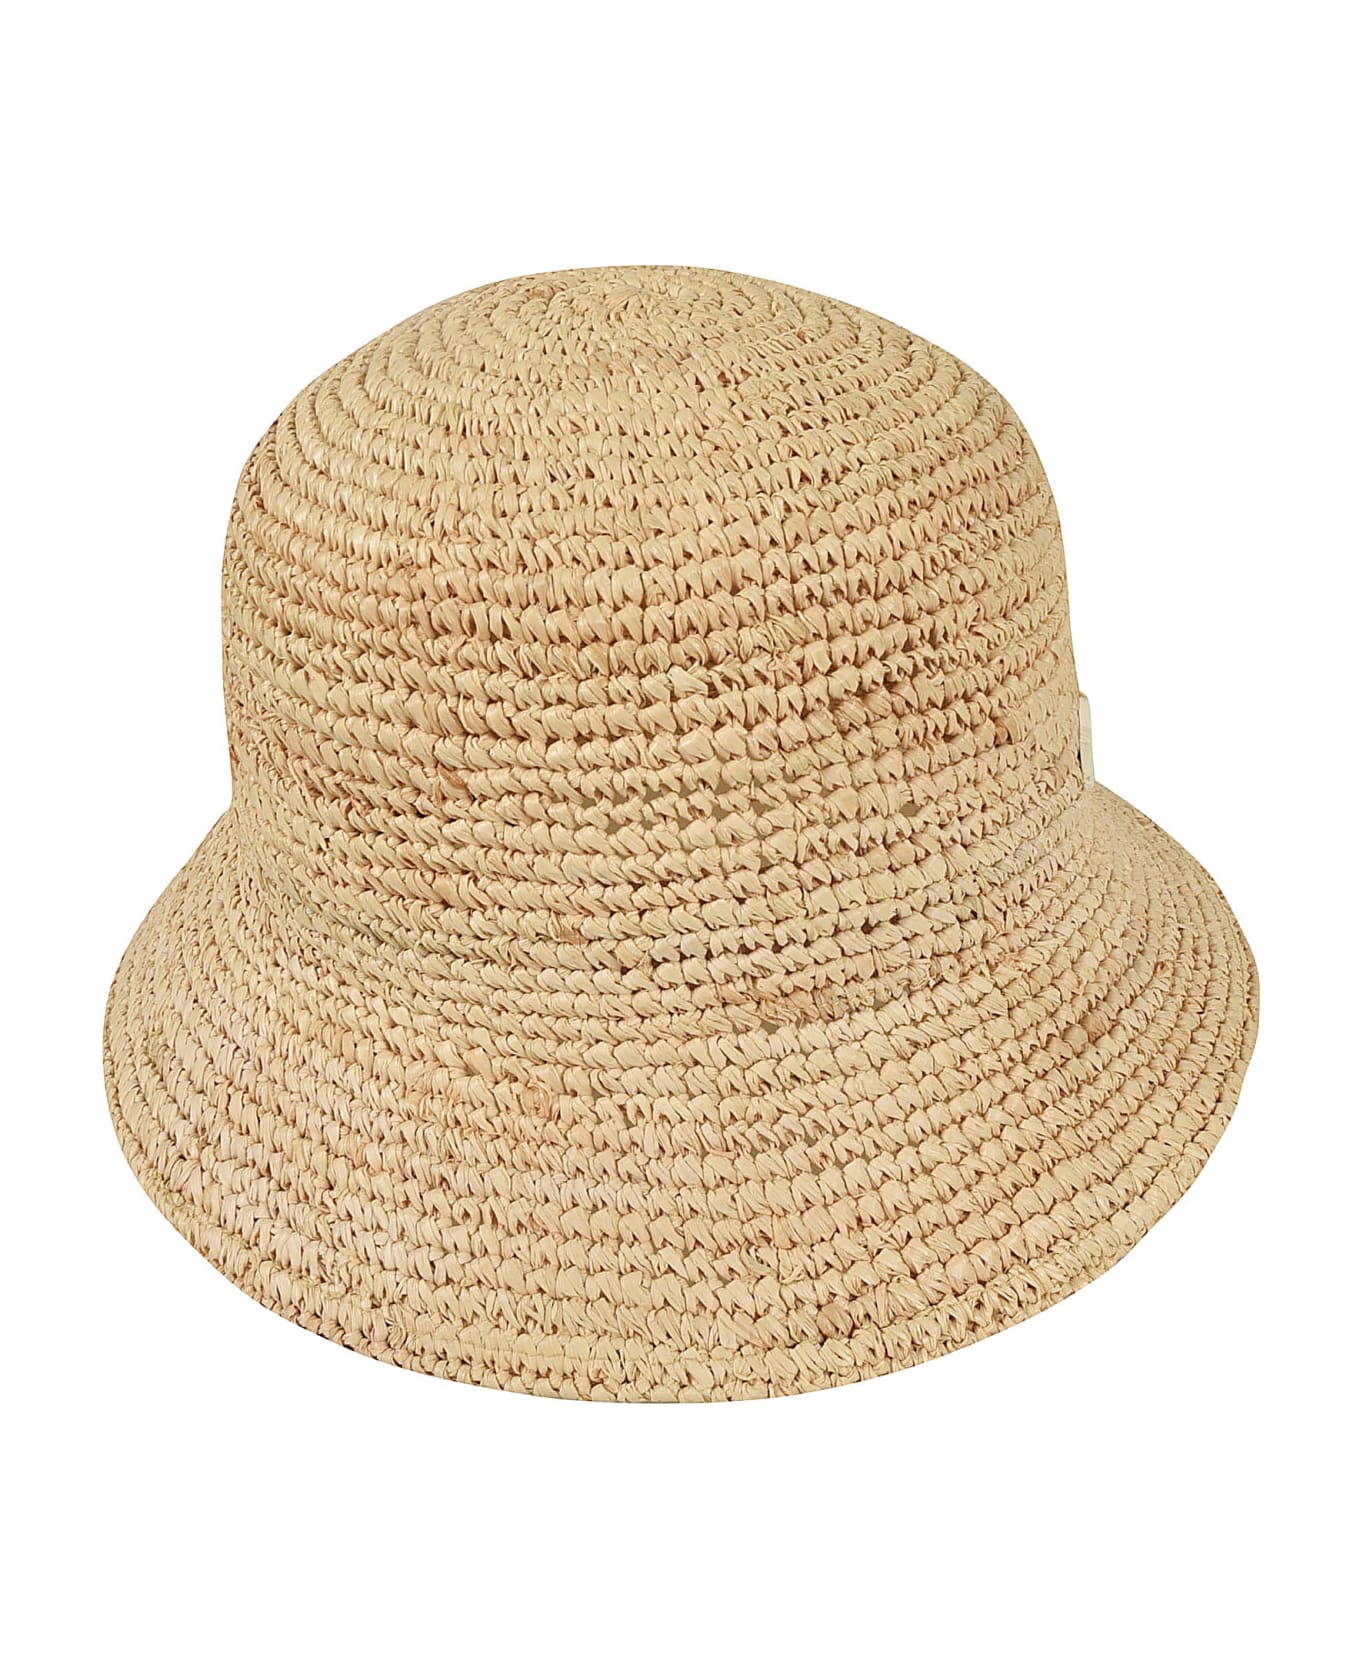 Borsalino Rafia Crochet Bucket Hat - Beige